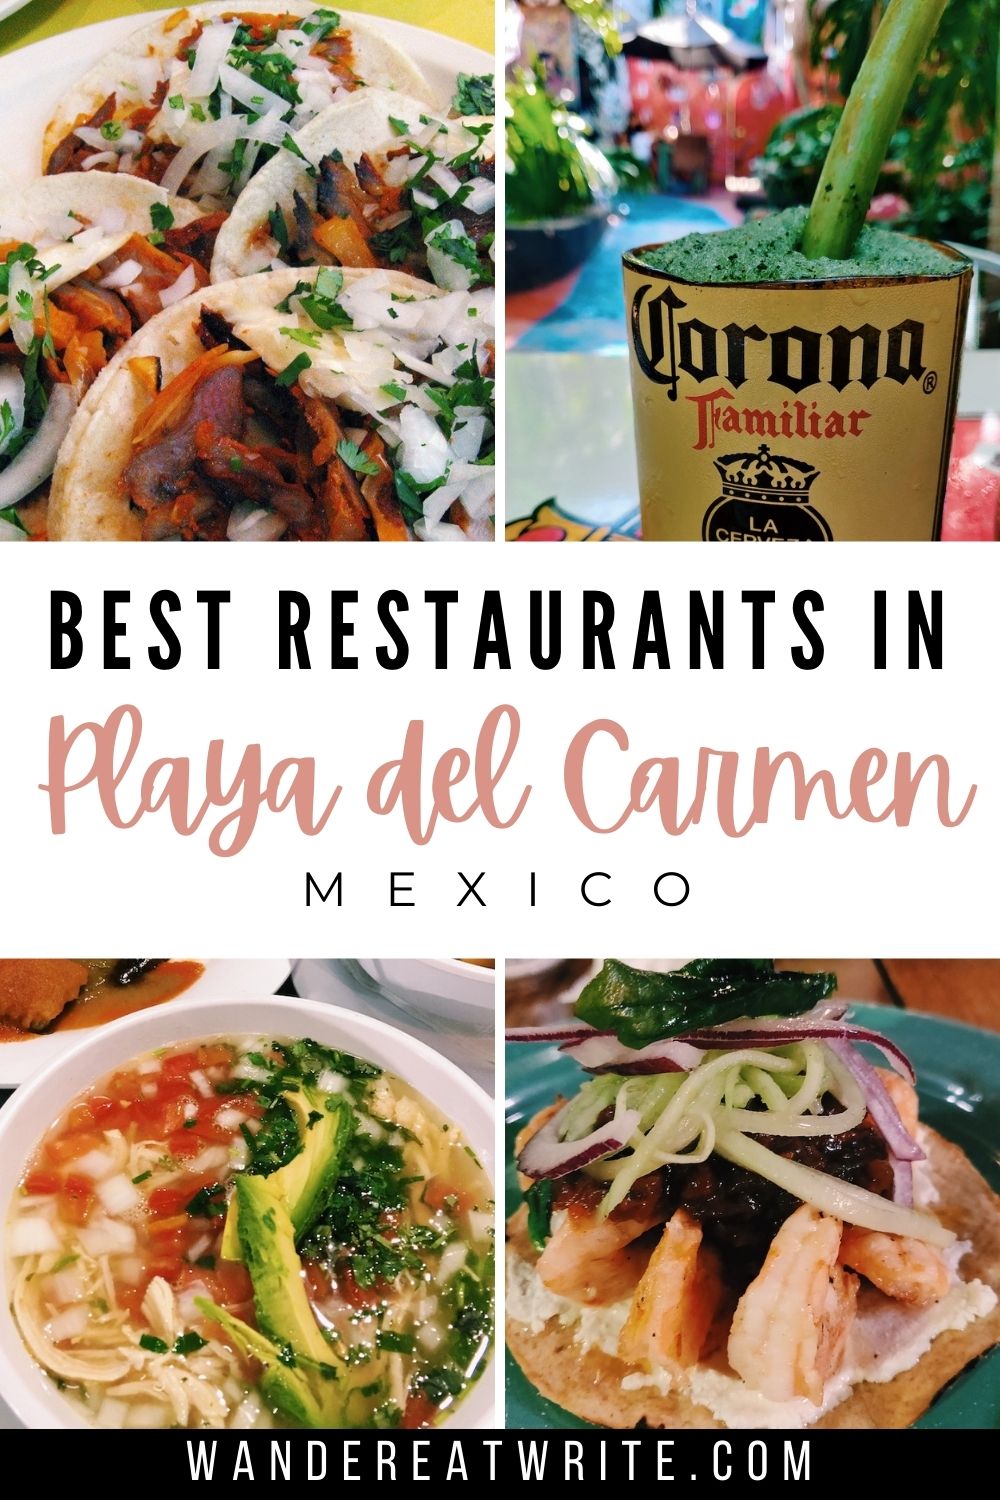 The Best Restaurants in Playa del Carmen pin with images of tacos al pastor, frozen mint lemonade, caldo de pollo, and a shrimp tostada